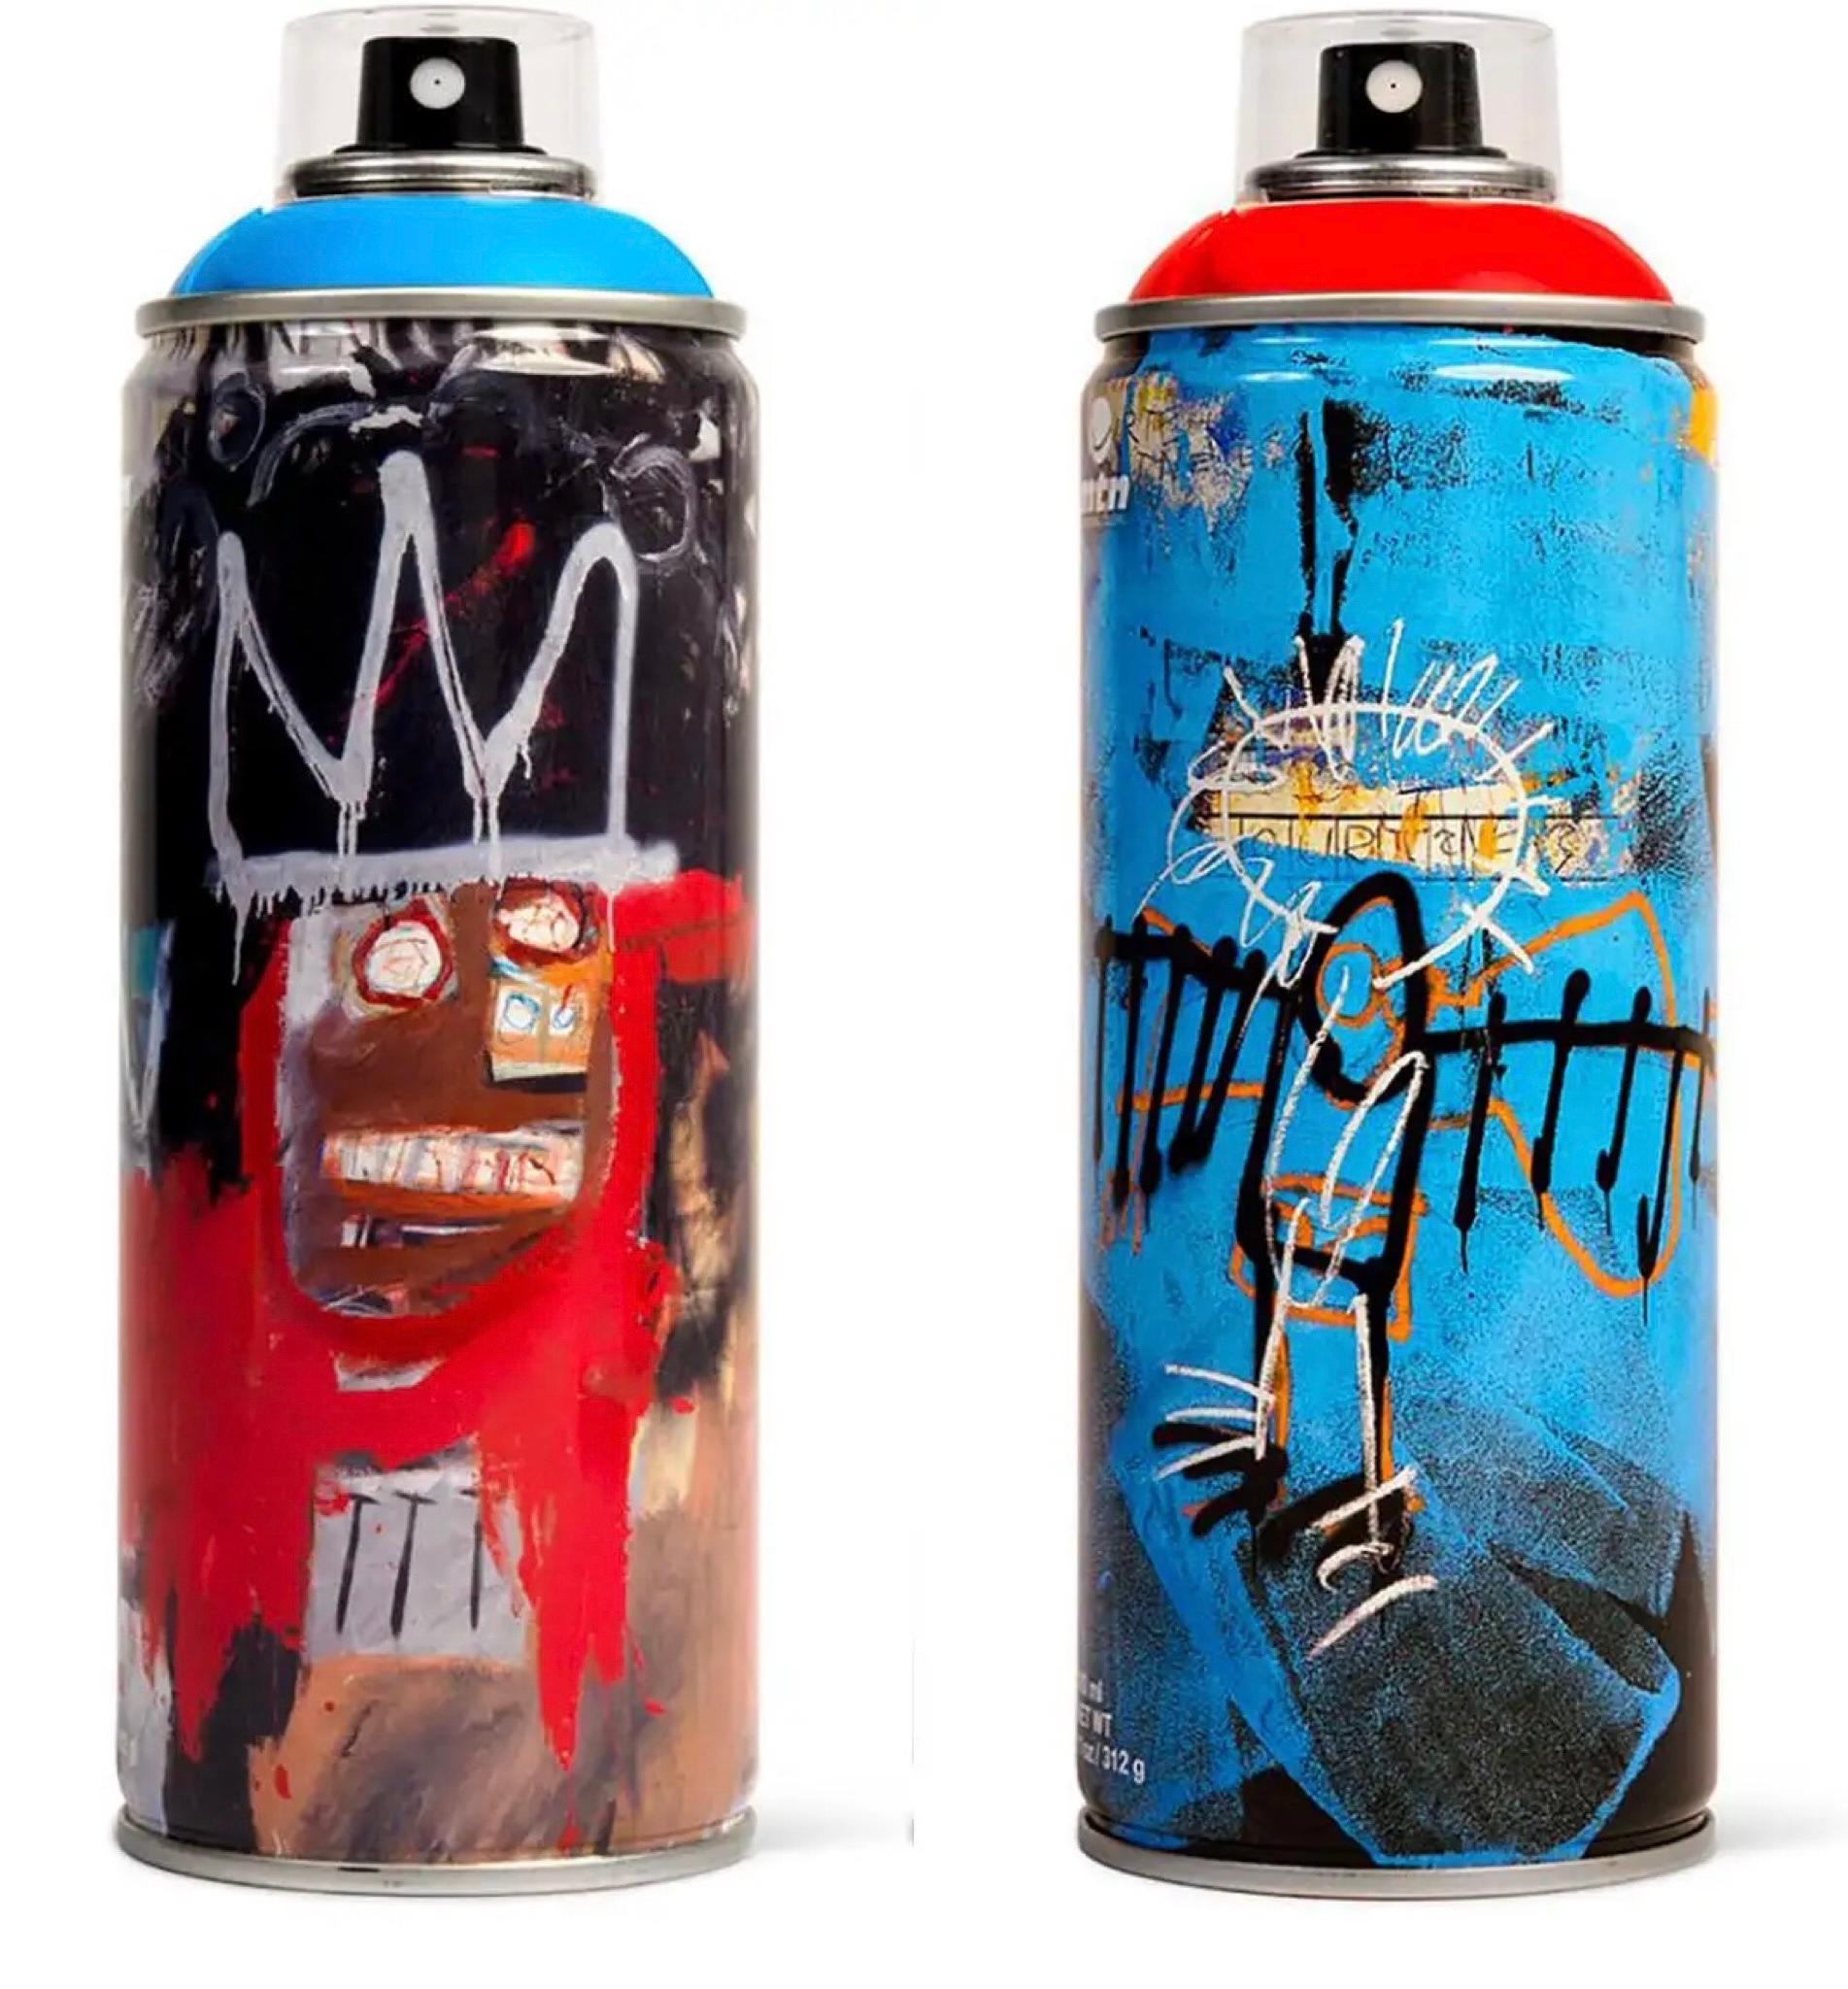 MTN x Estate of Jean-Michel Basquiat Spray Paint Cans